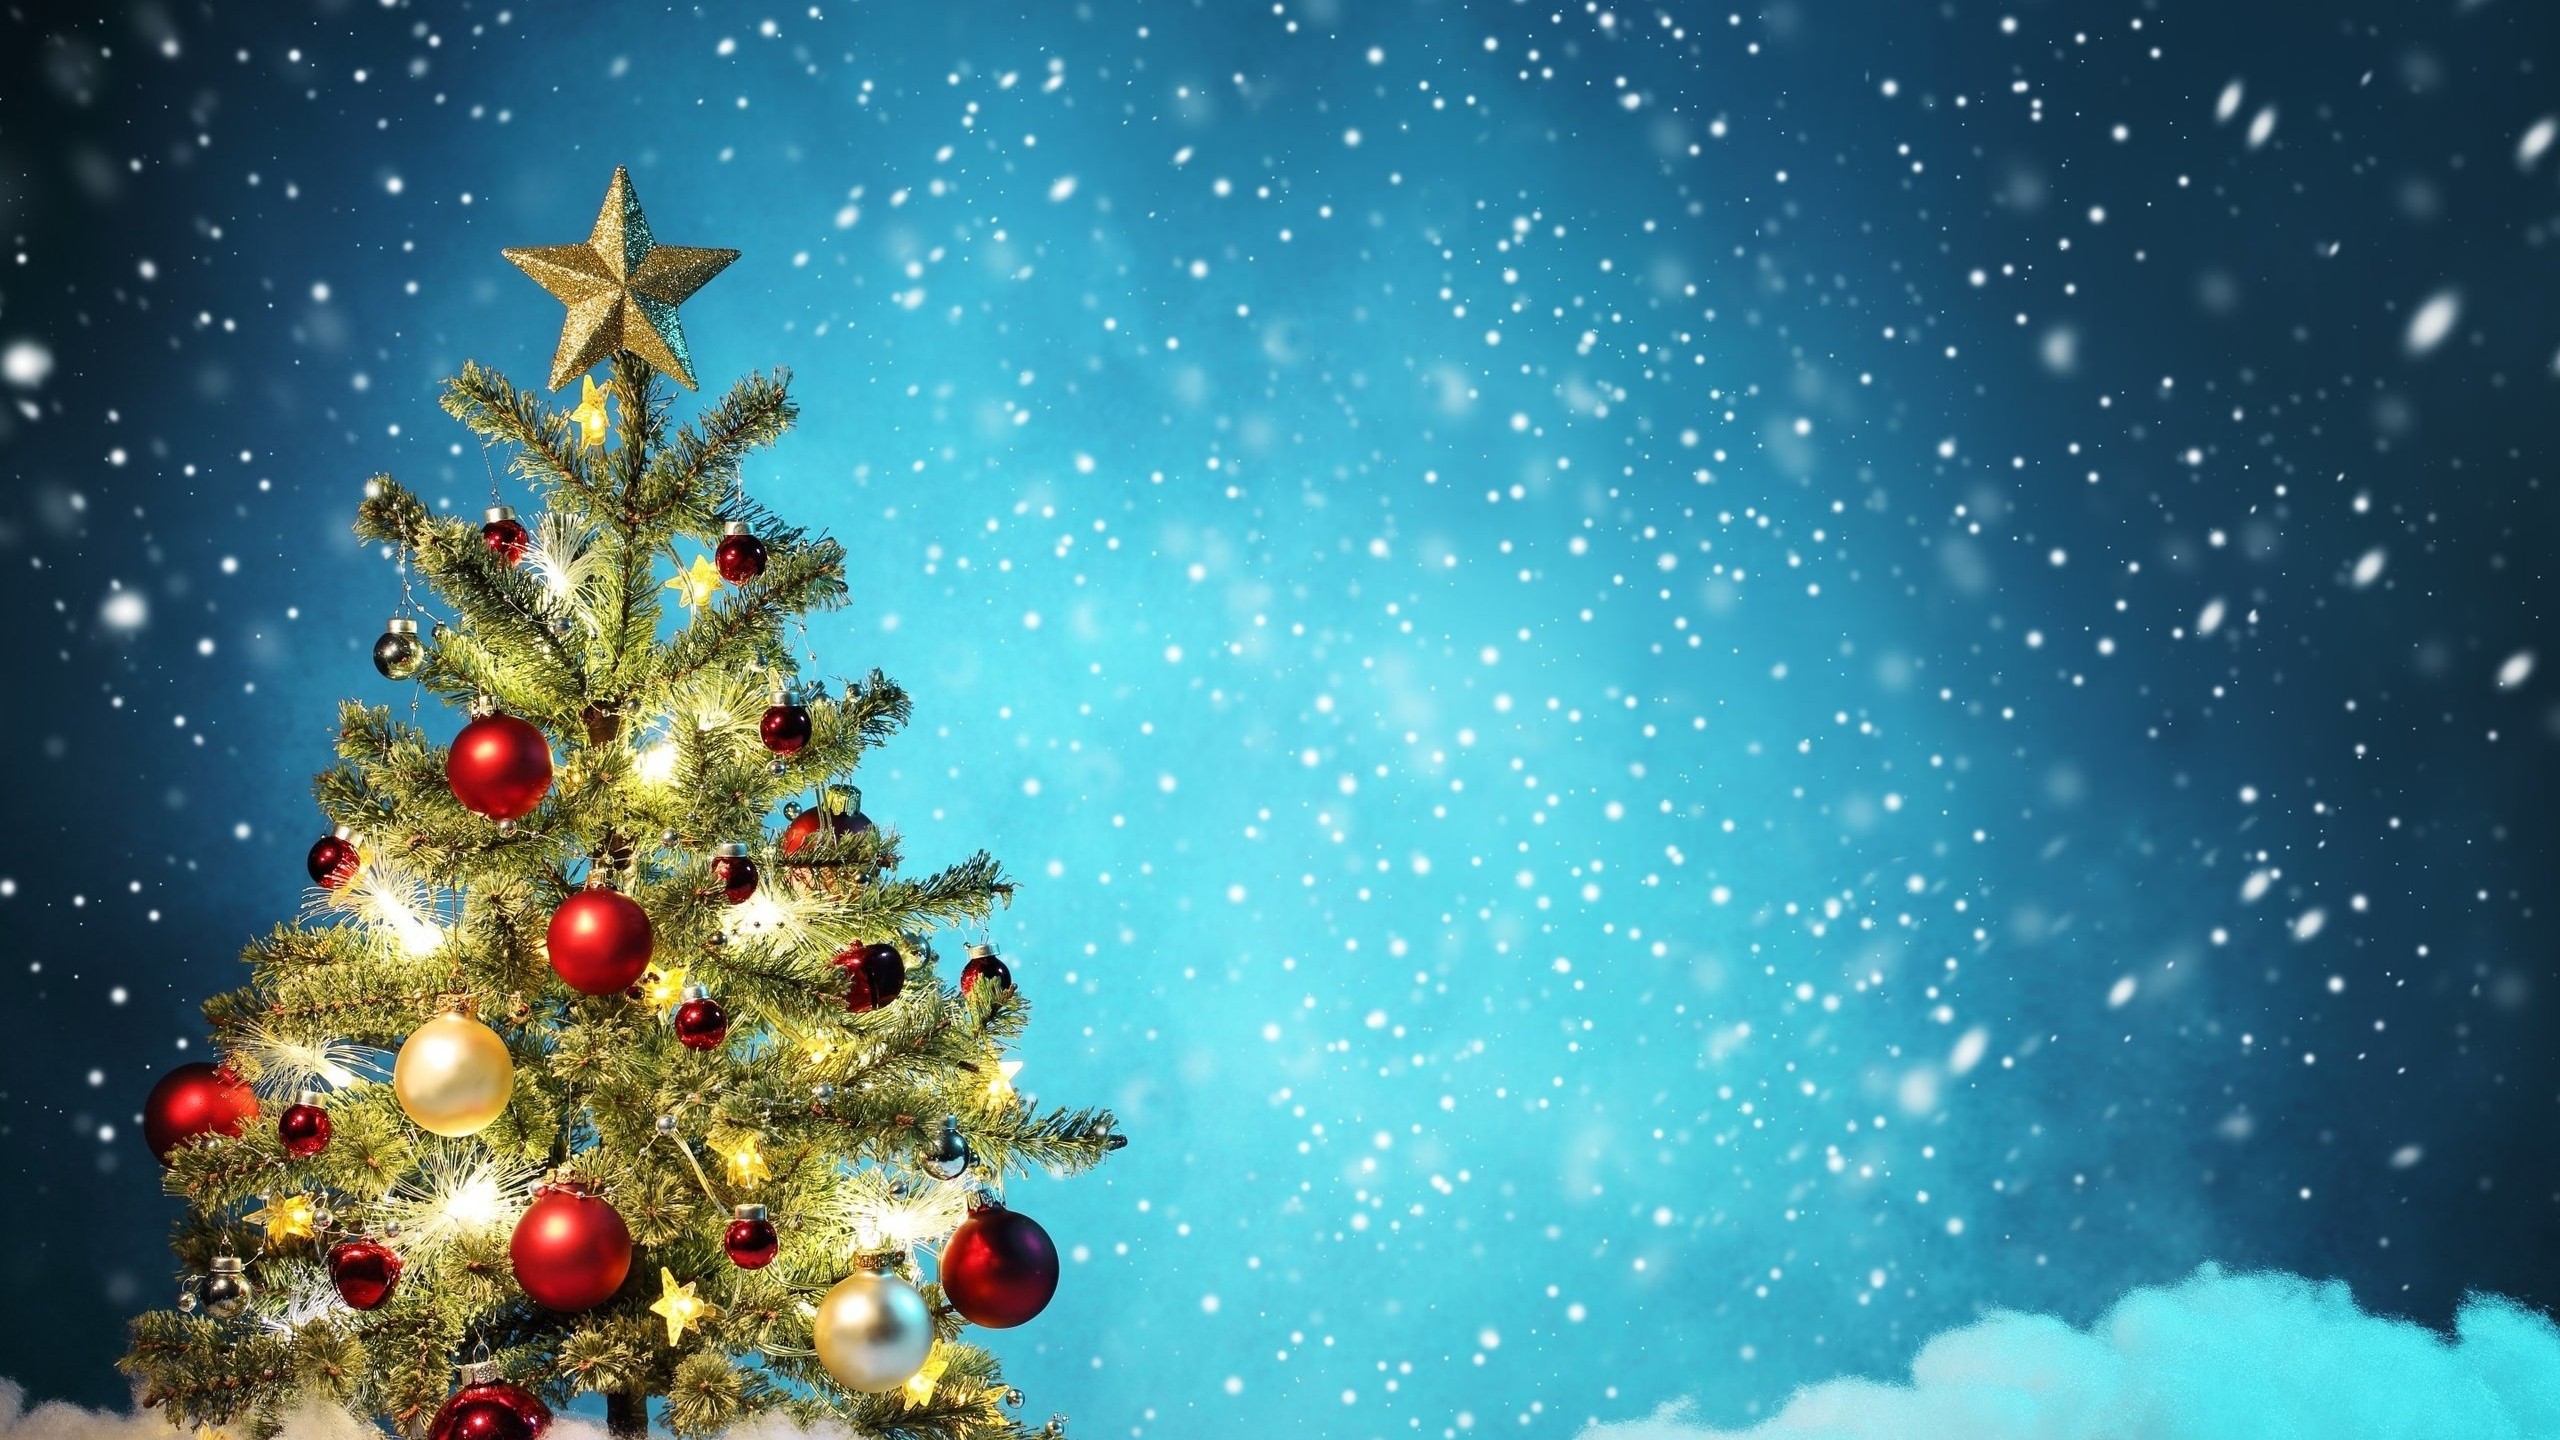 Beautiful Christmas Tree Wallpaper for Social Media YouTube Channel Art